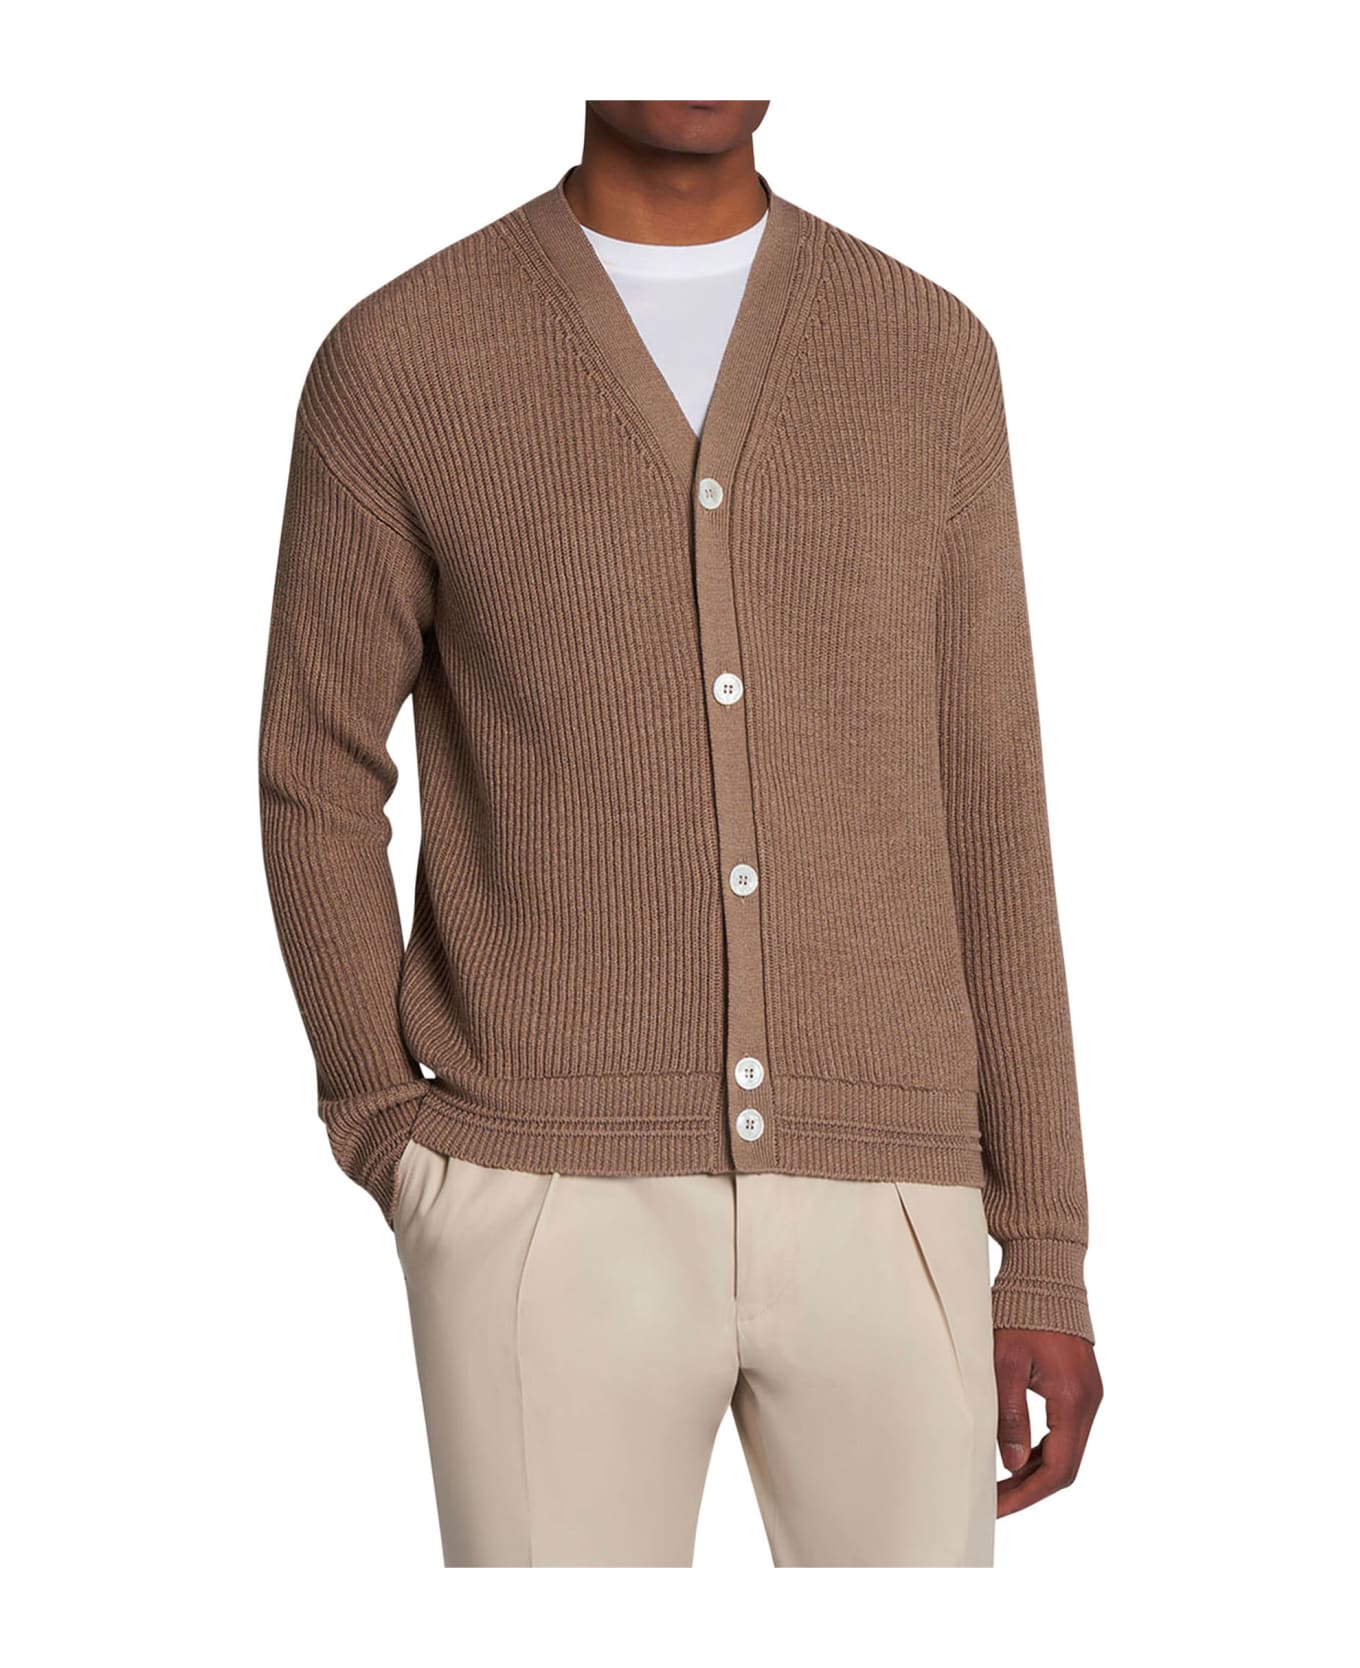 Kiton Sweater Cotton - CAMEL